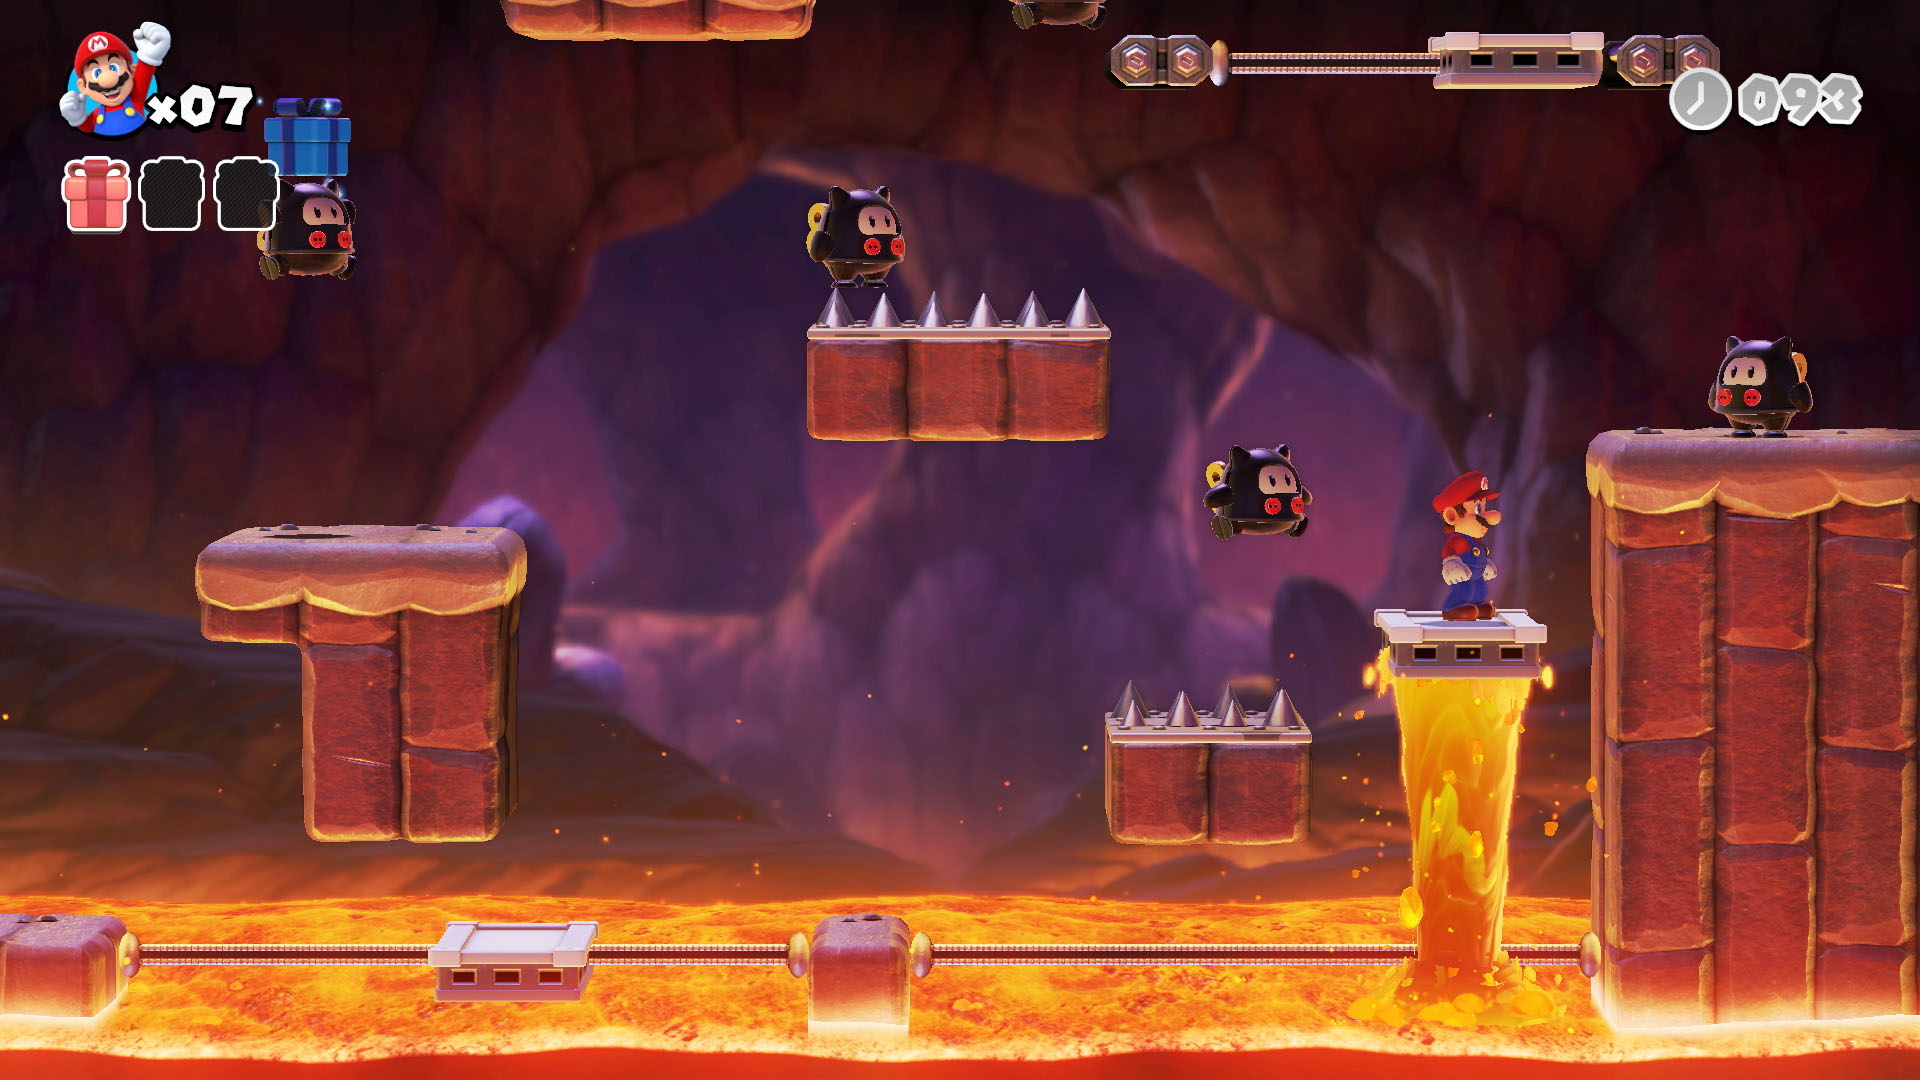 Mario vs. Donkey Kong announced for Switch - Gematsu